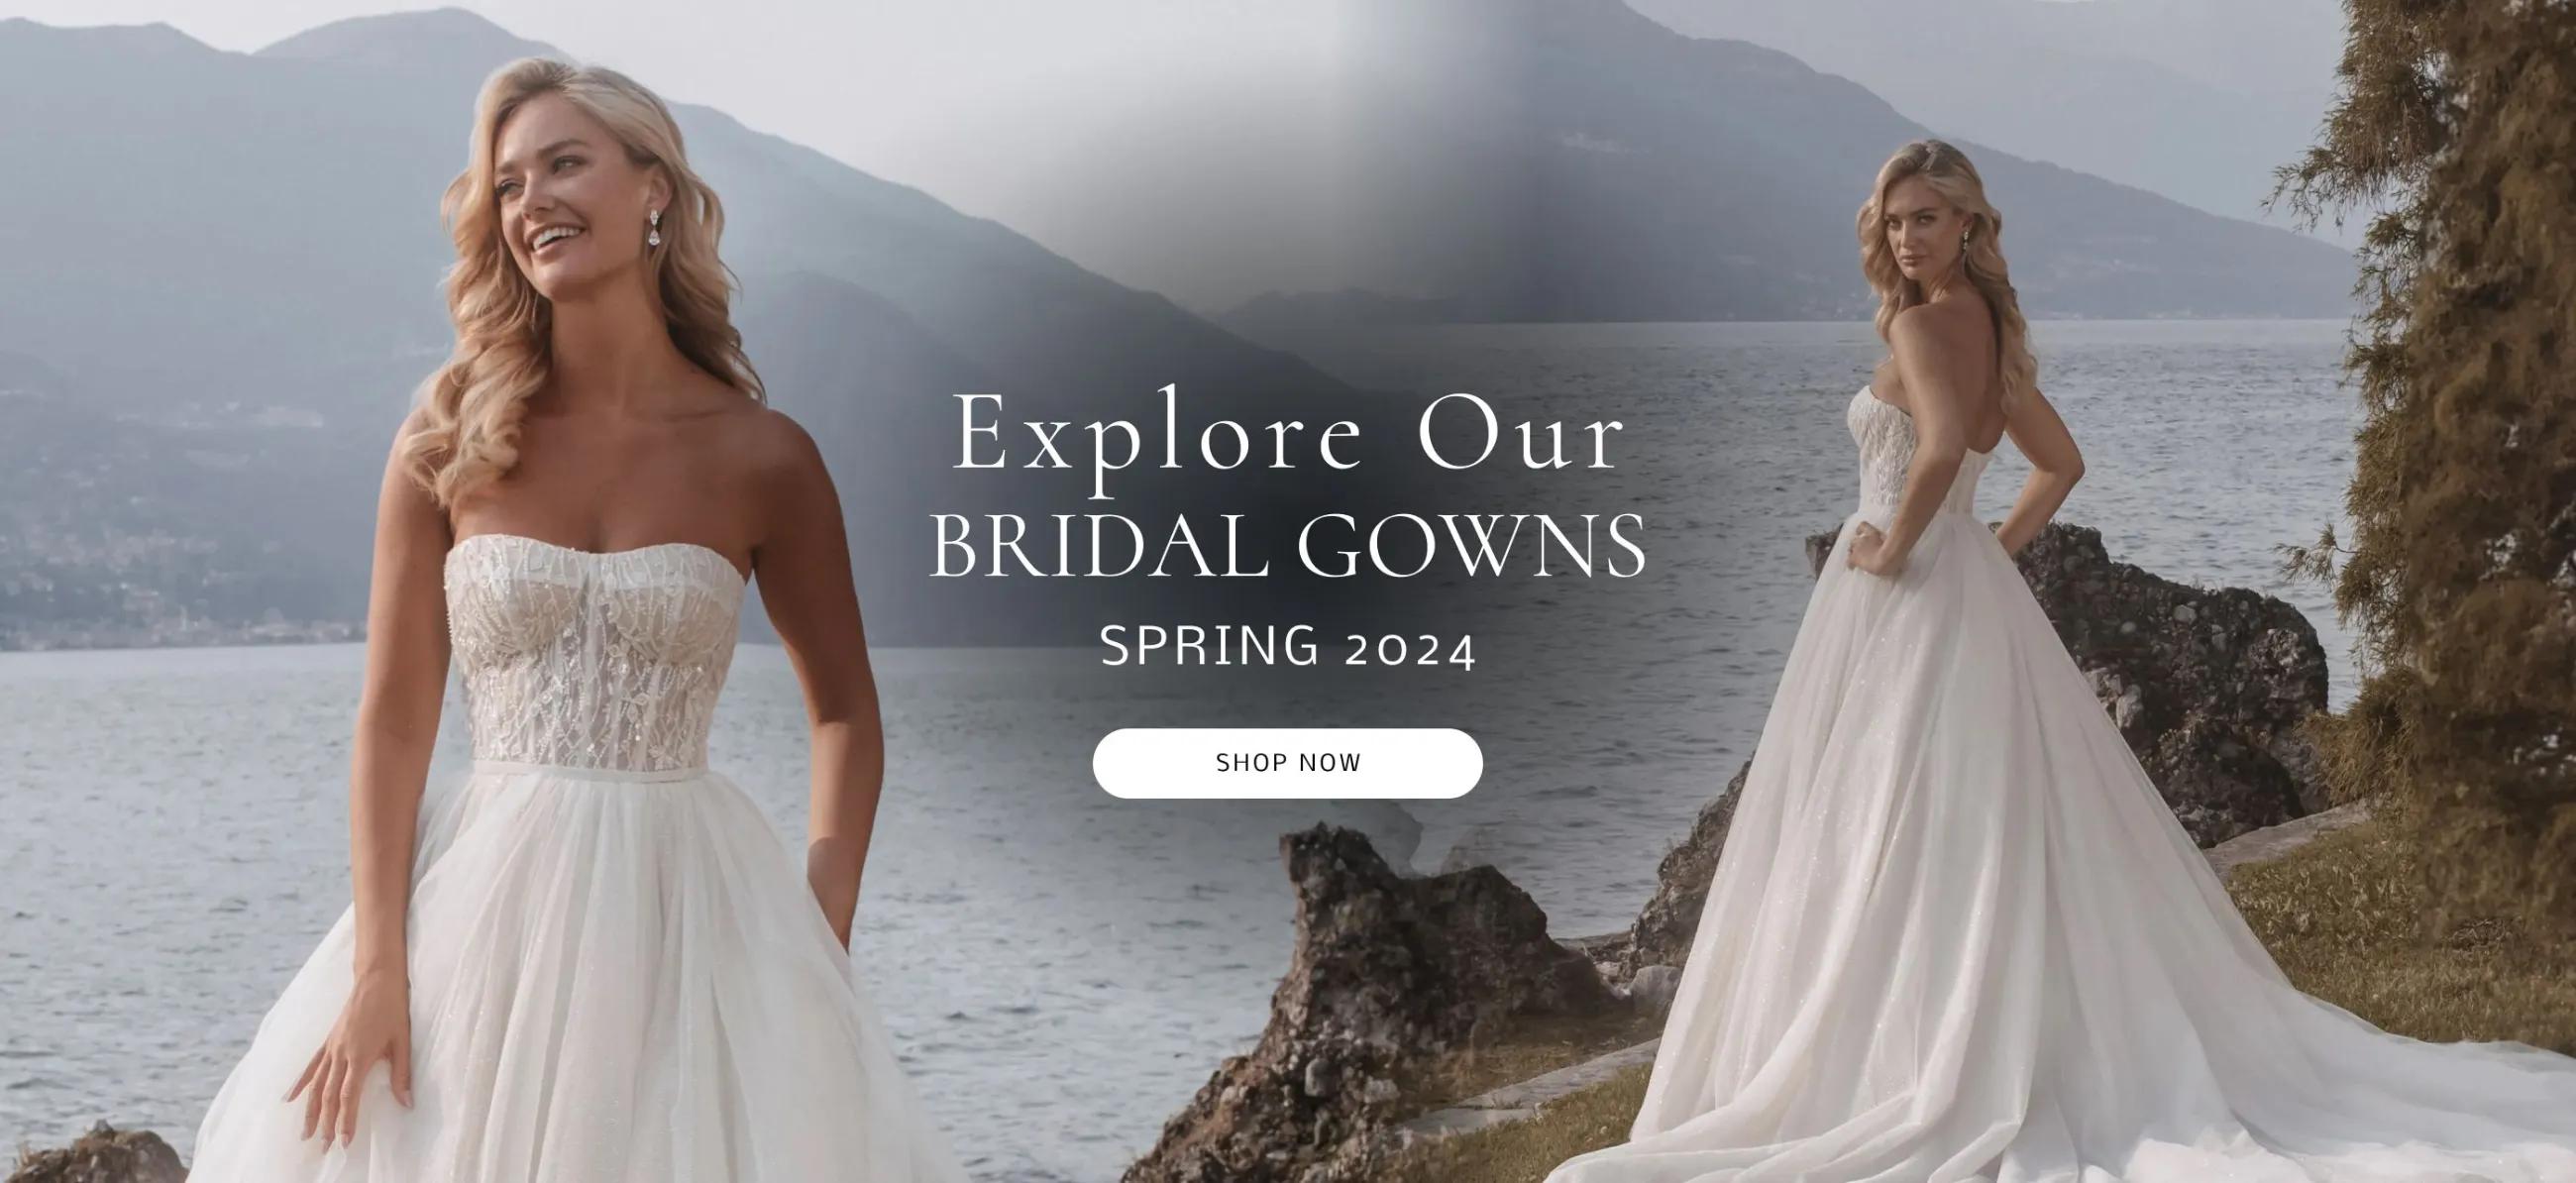 Desktop Explore Our Bridal Gowns Spring 2024 Banner